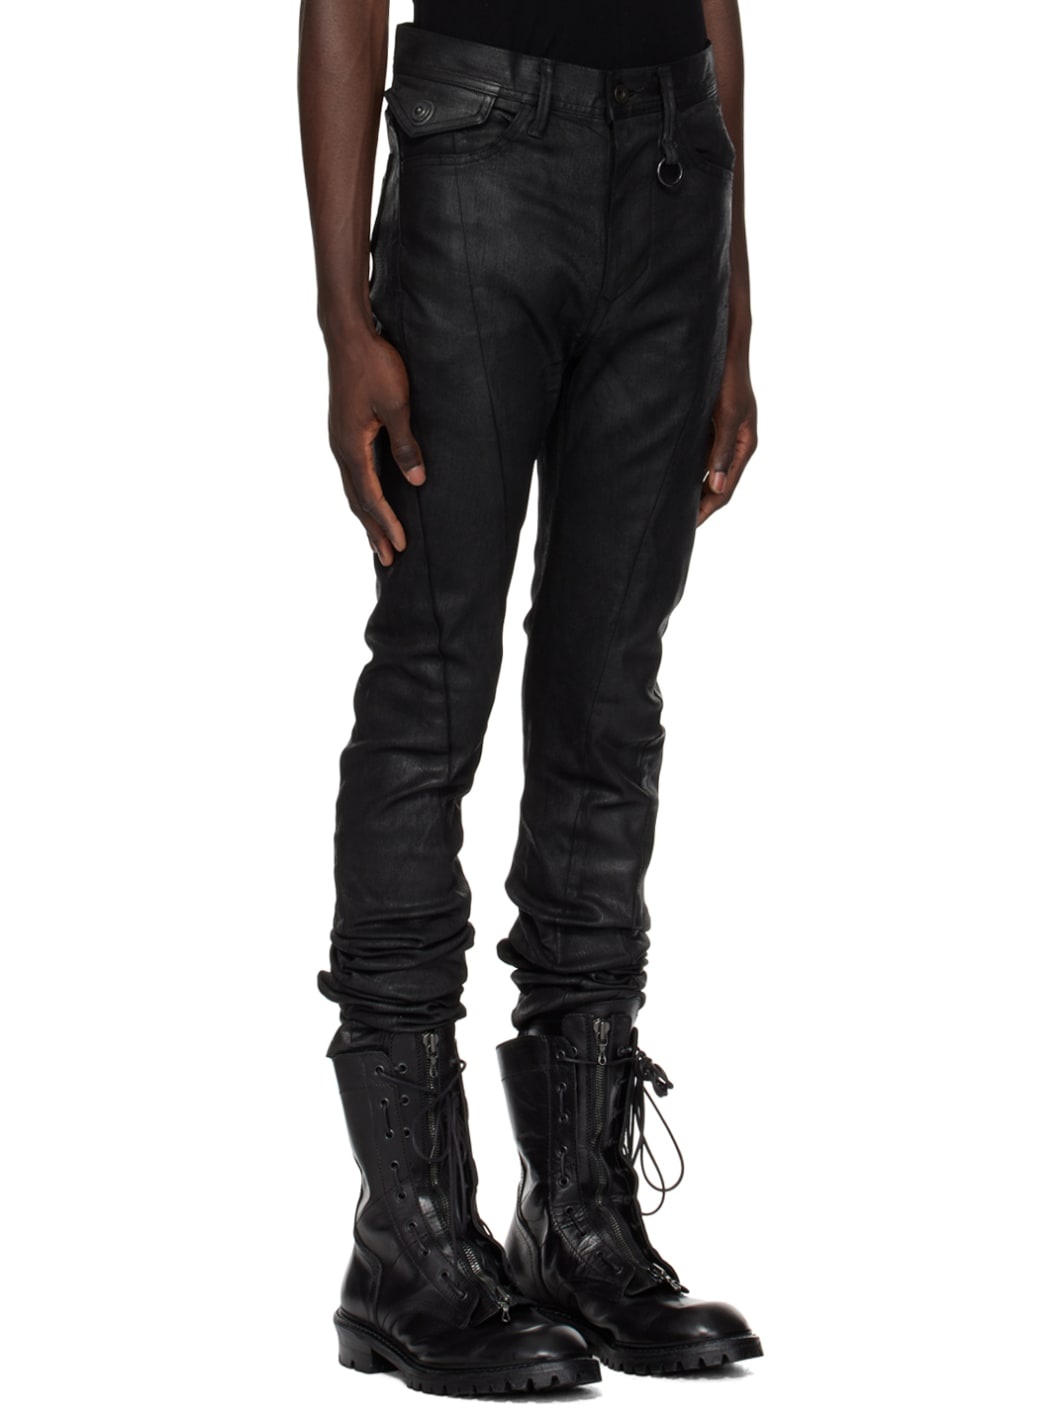 Black Arched Skinny Jeans - 2